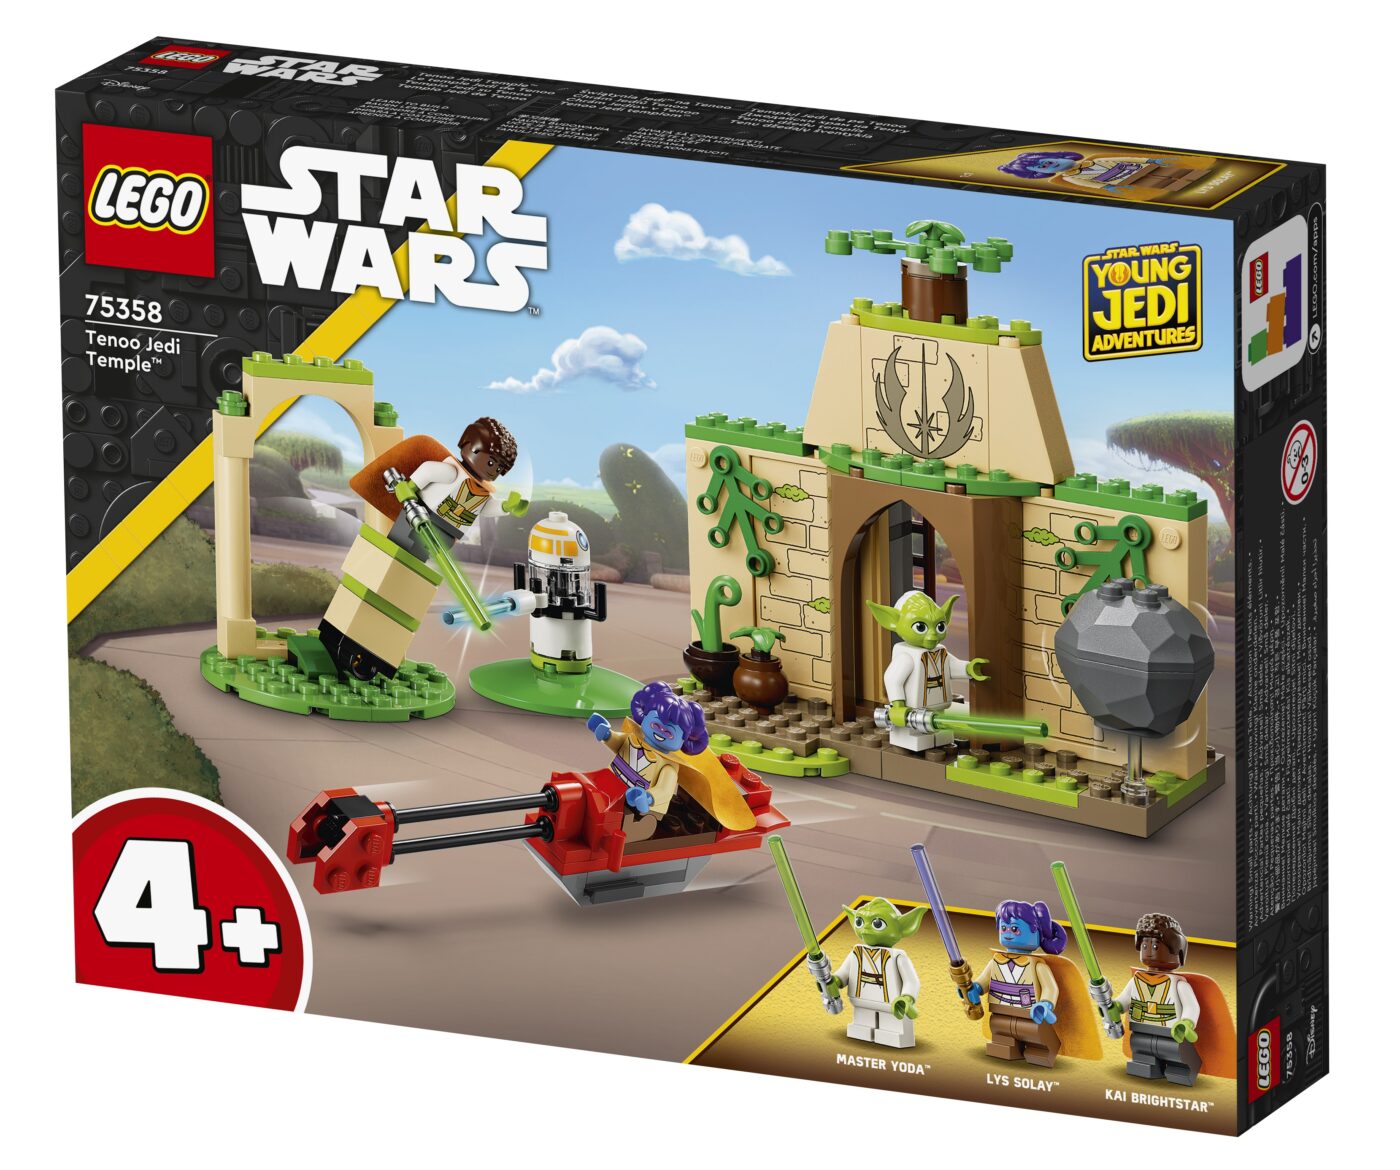 Modsatte dyr trist LEGO Star Wars 75358 Tenoo Jedi Temple from Young Jedi Adventures revealed!  - Jay's Brick Blog